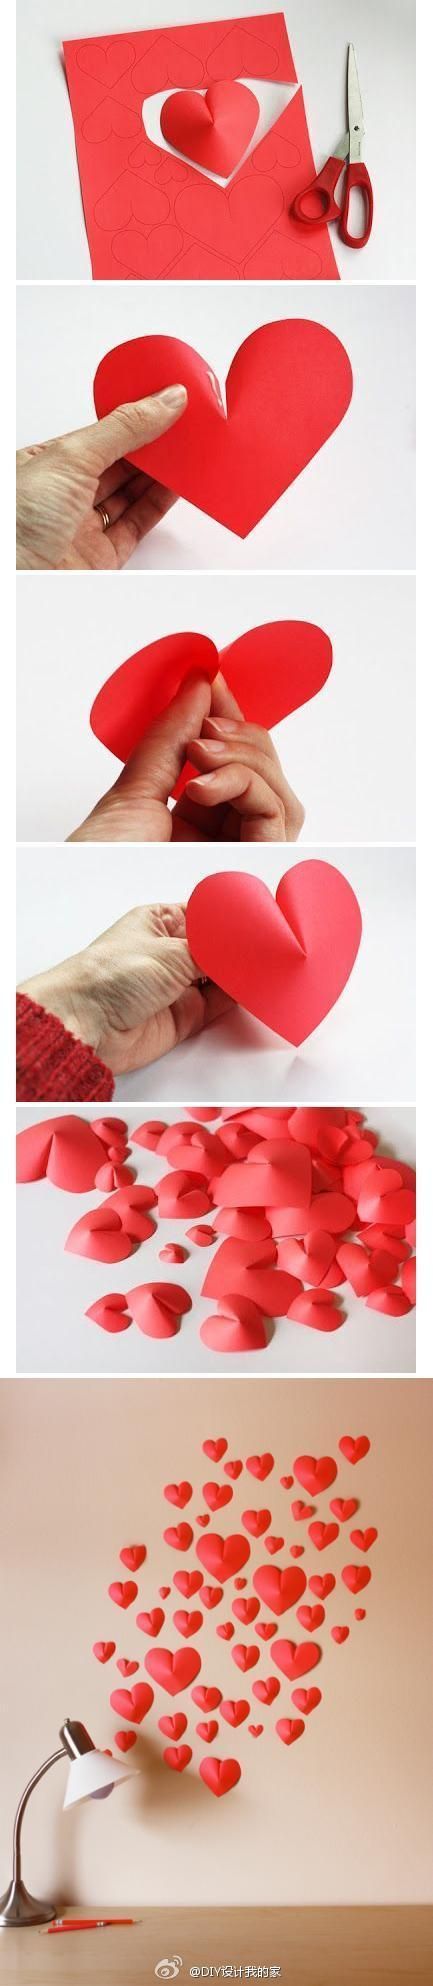 Make a 3D Paper Heart for cute decorations #DIY